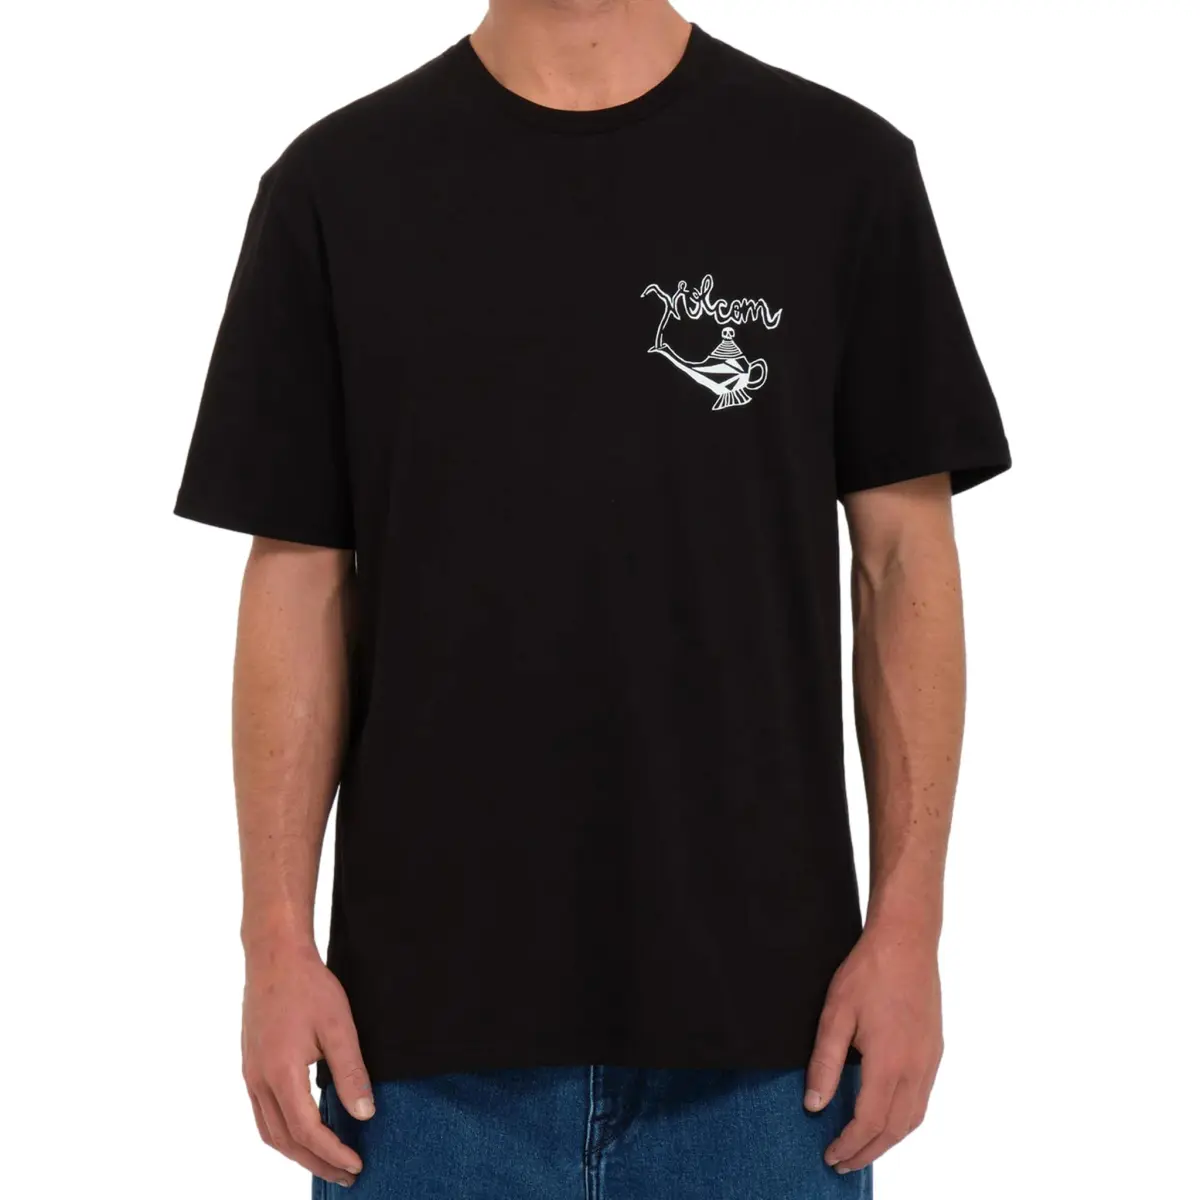 Volcom gonymagic t-shirt black bsc